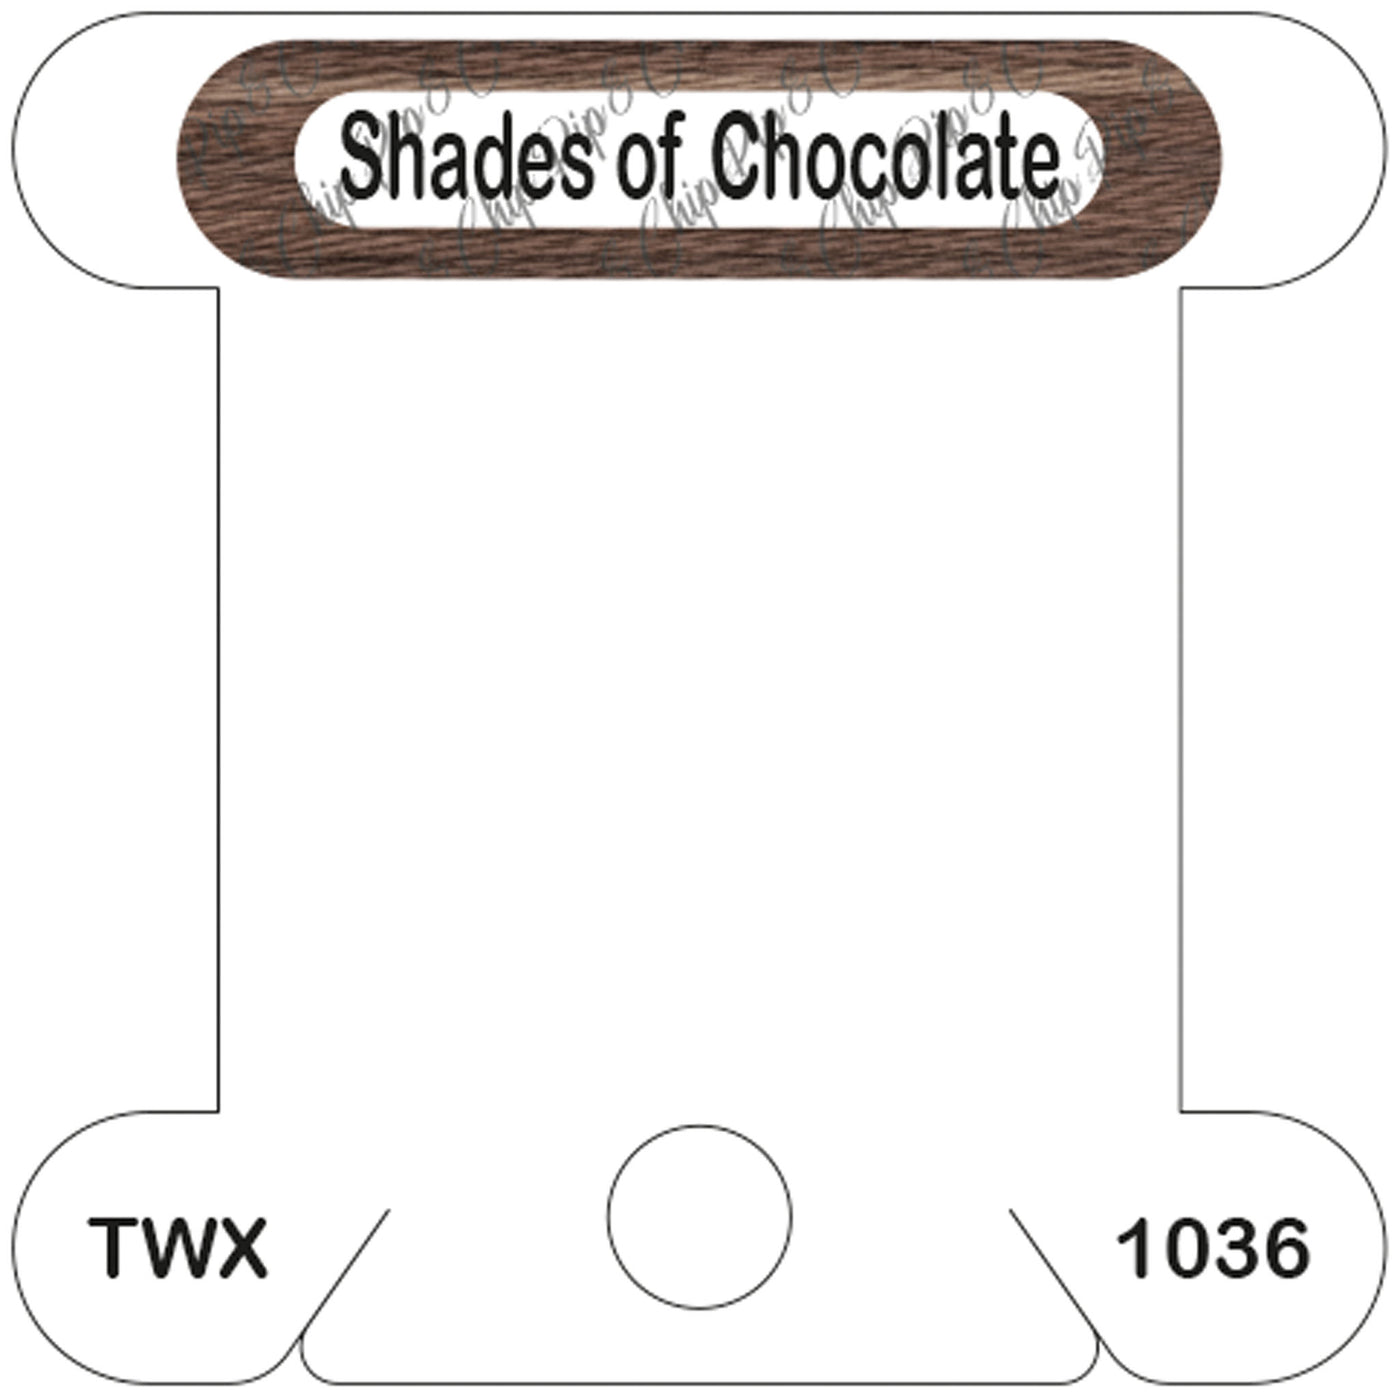 ThreadworX Shades of Chocolate acrylic bobbin